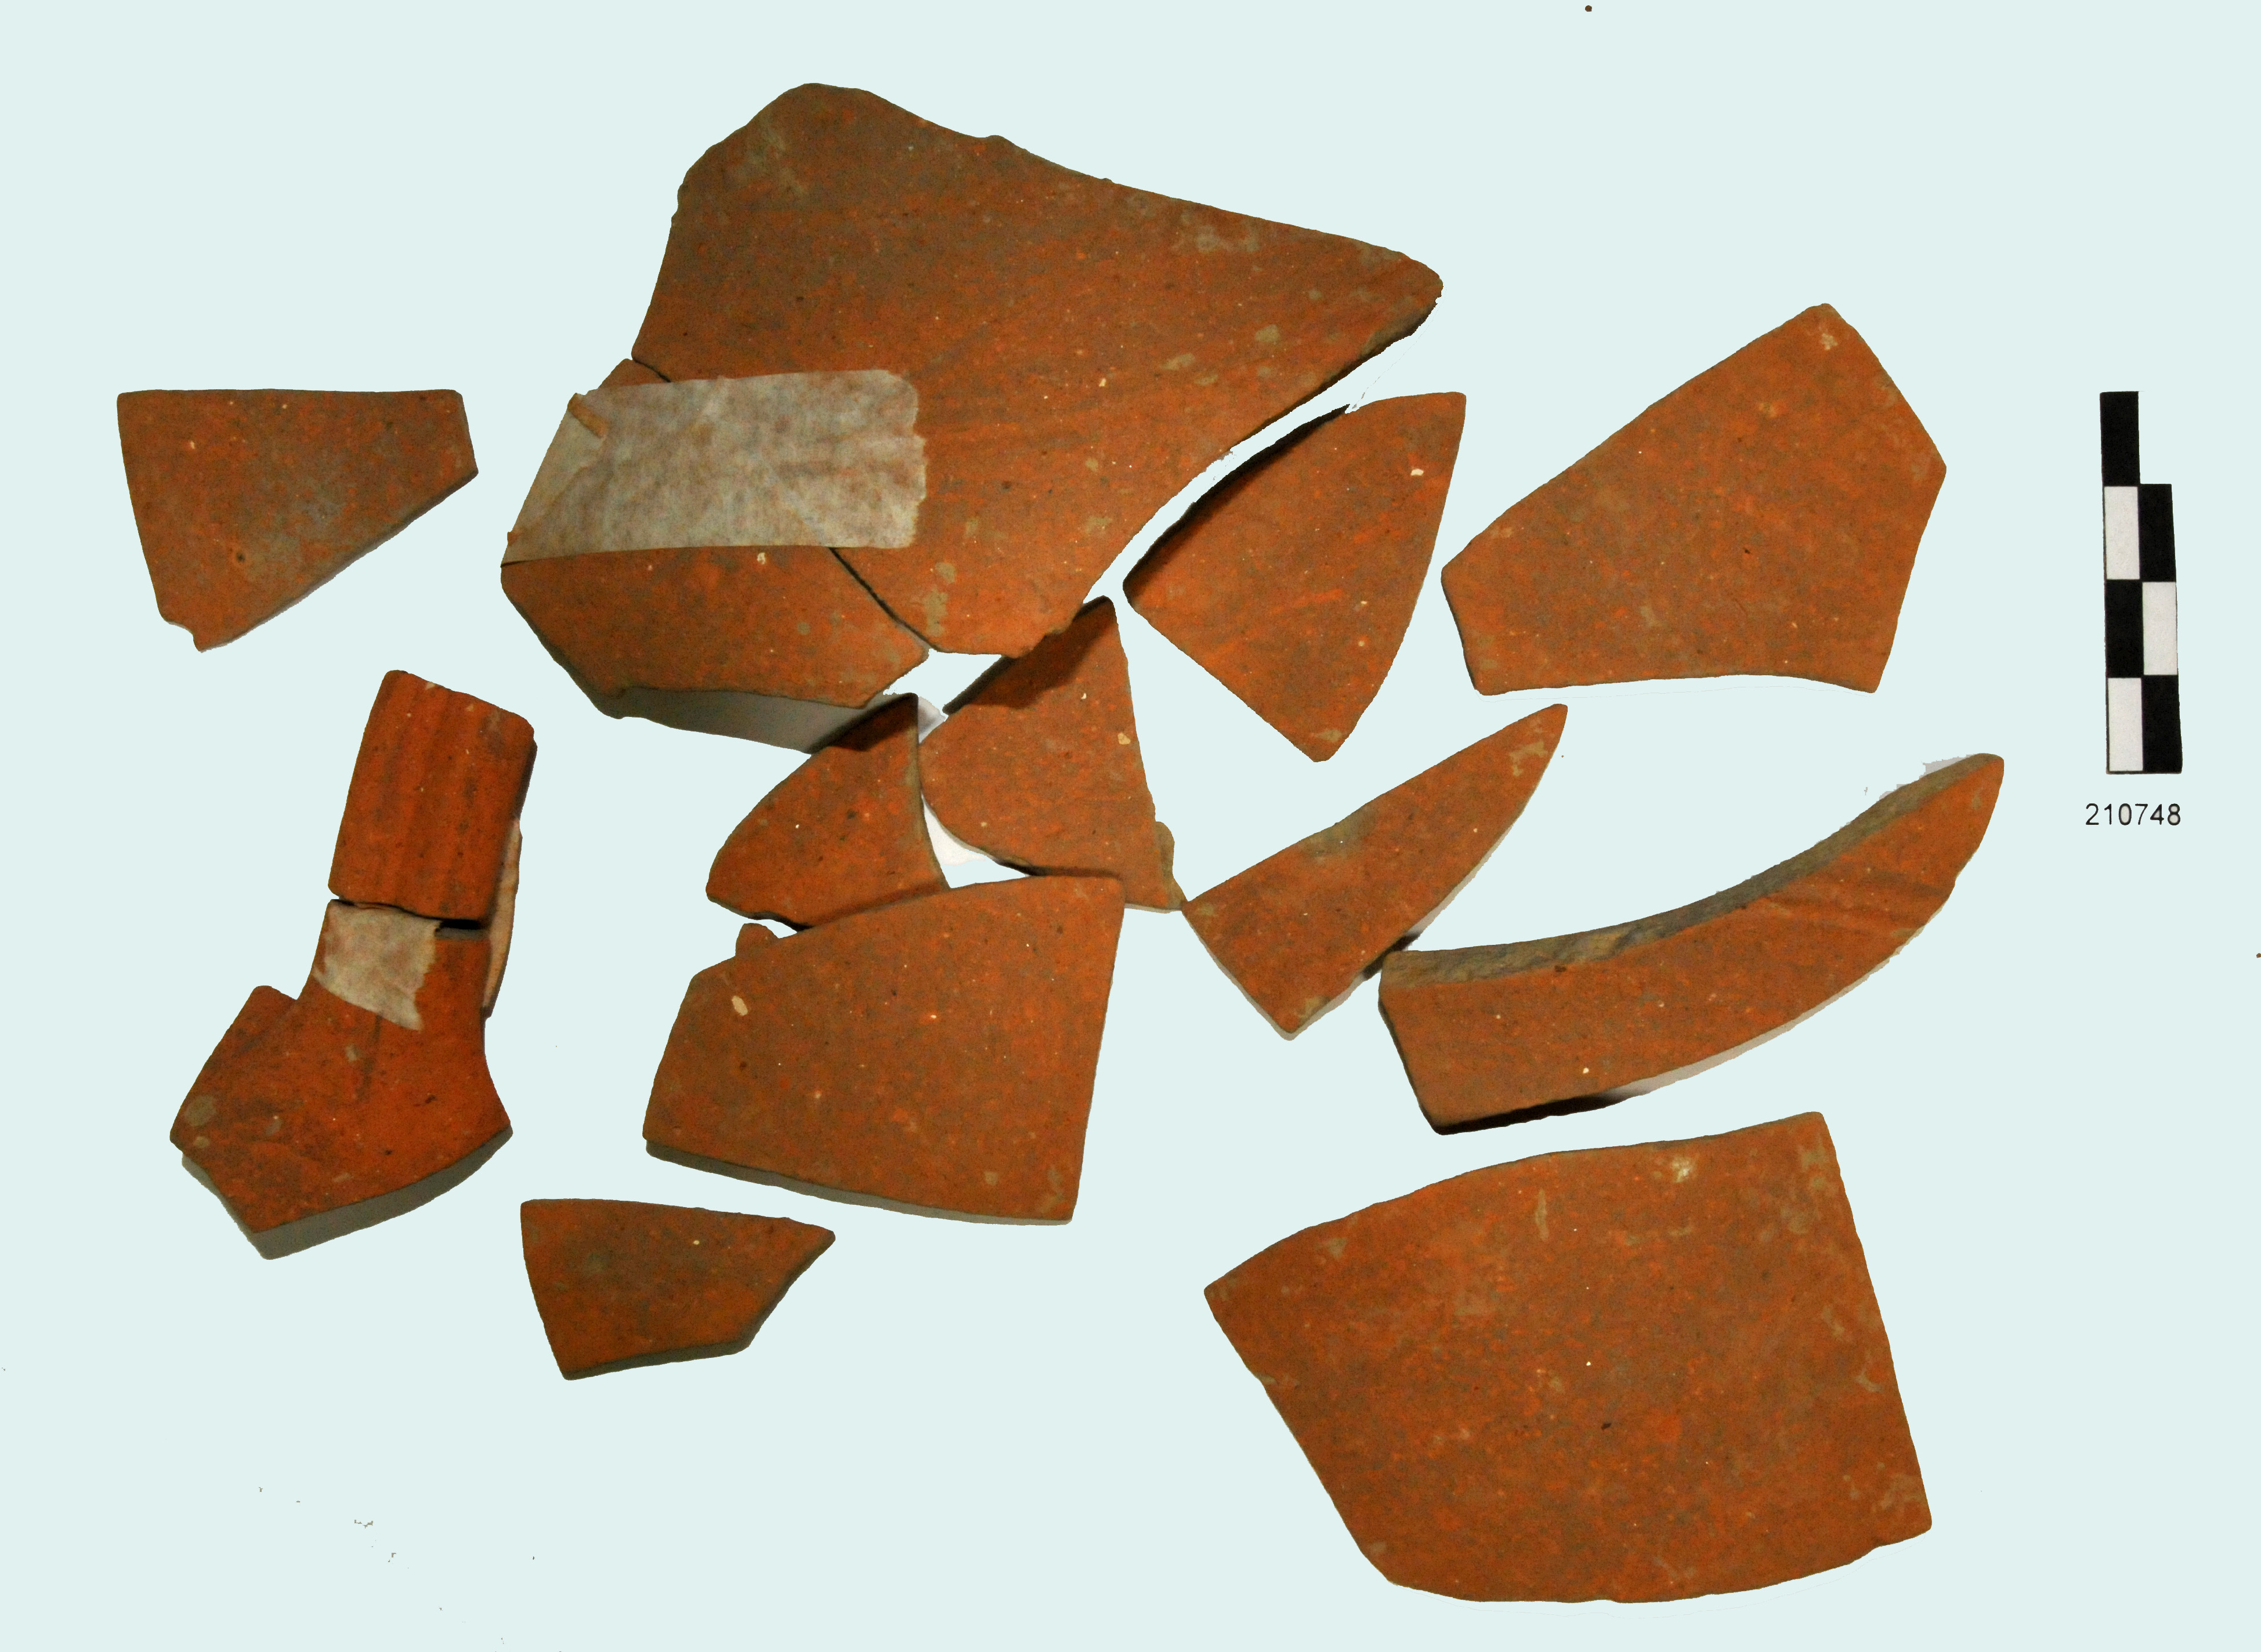 ansa, parete, argilla marrone chiaro, dura, superficie metallica (I d.C - II d.C)